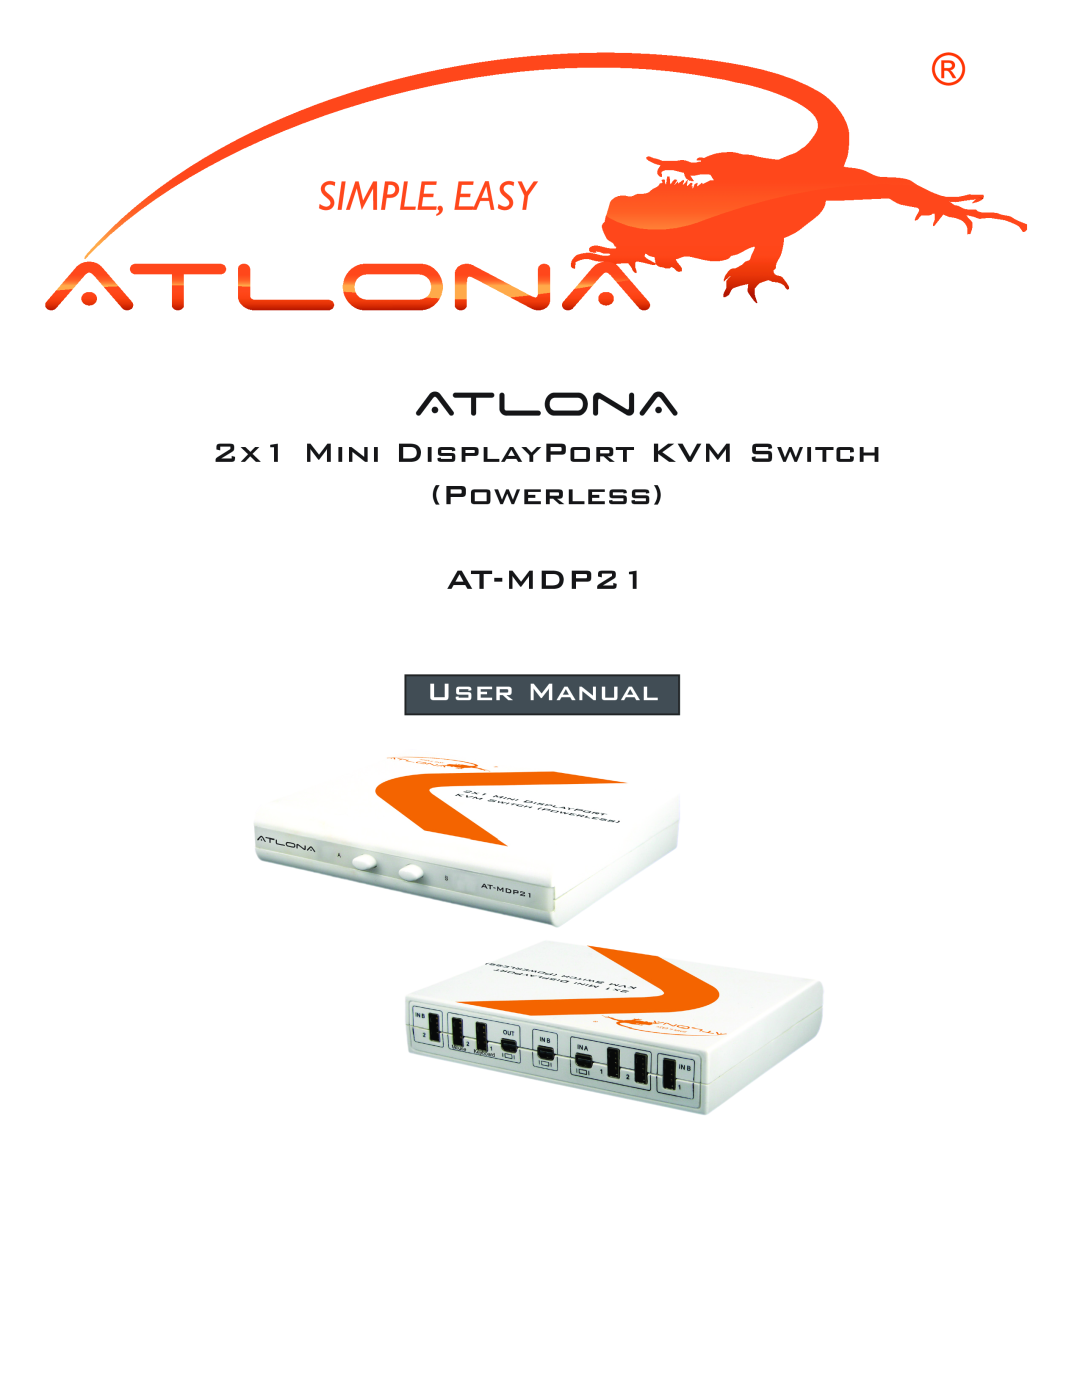 Atlona user manual Atlona, 2X1 MINI DISPLAYPORT KVM SWITCH POWERLESS AT-MDP21 